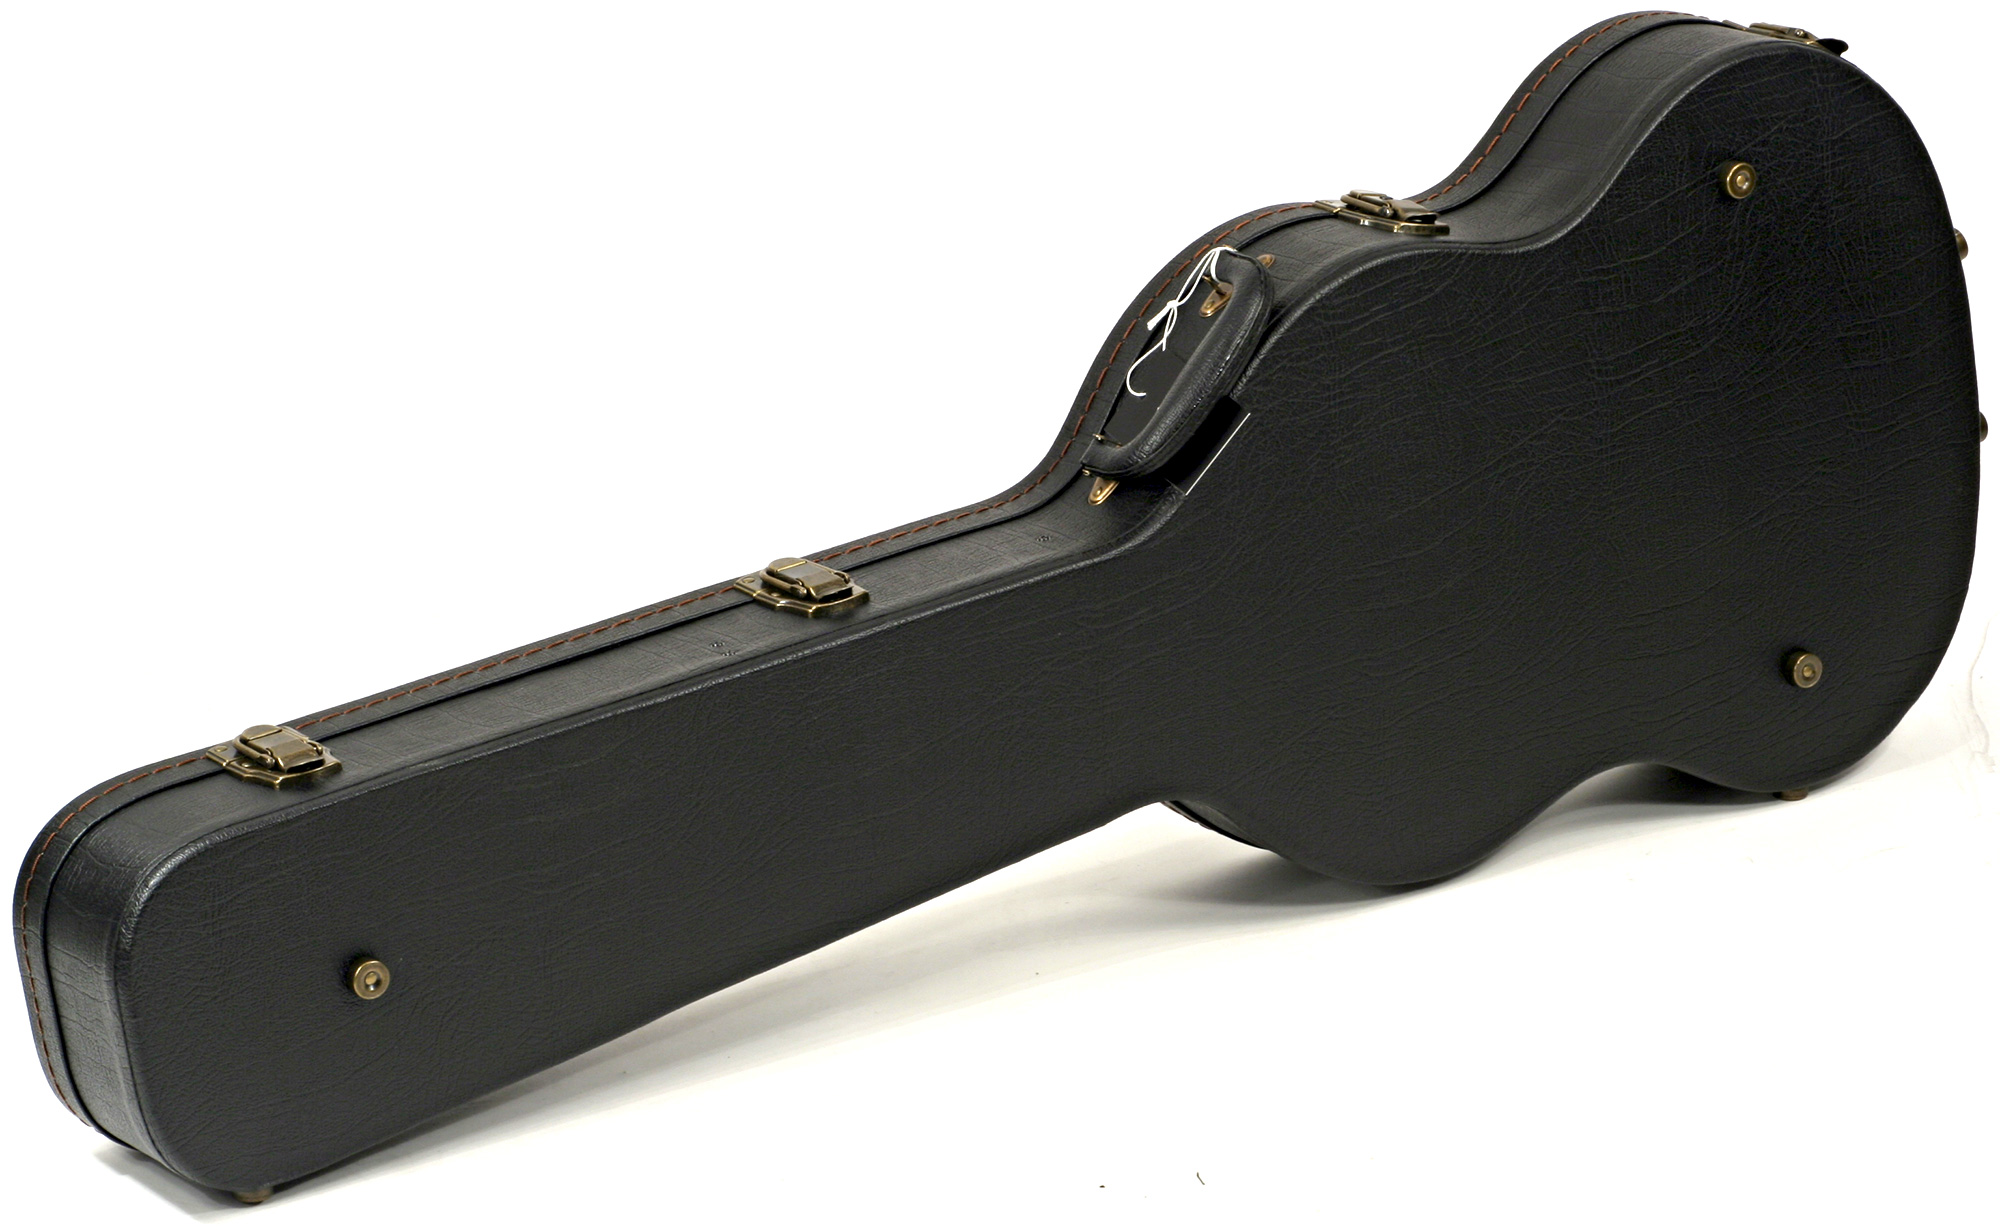 X-tone 1553 Deluxe Electrique Sg En Forme Black - Maleta para guitarra eléctrica - Variation 1